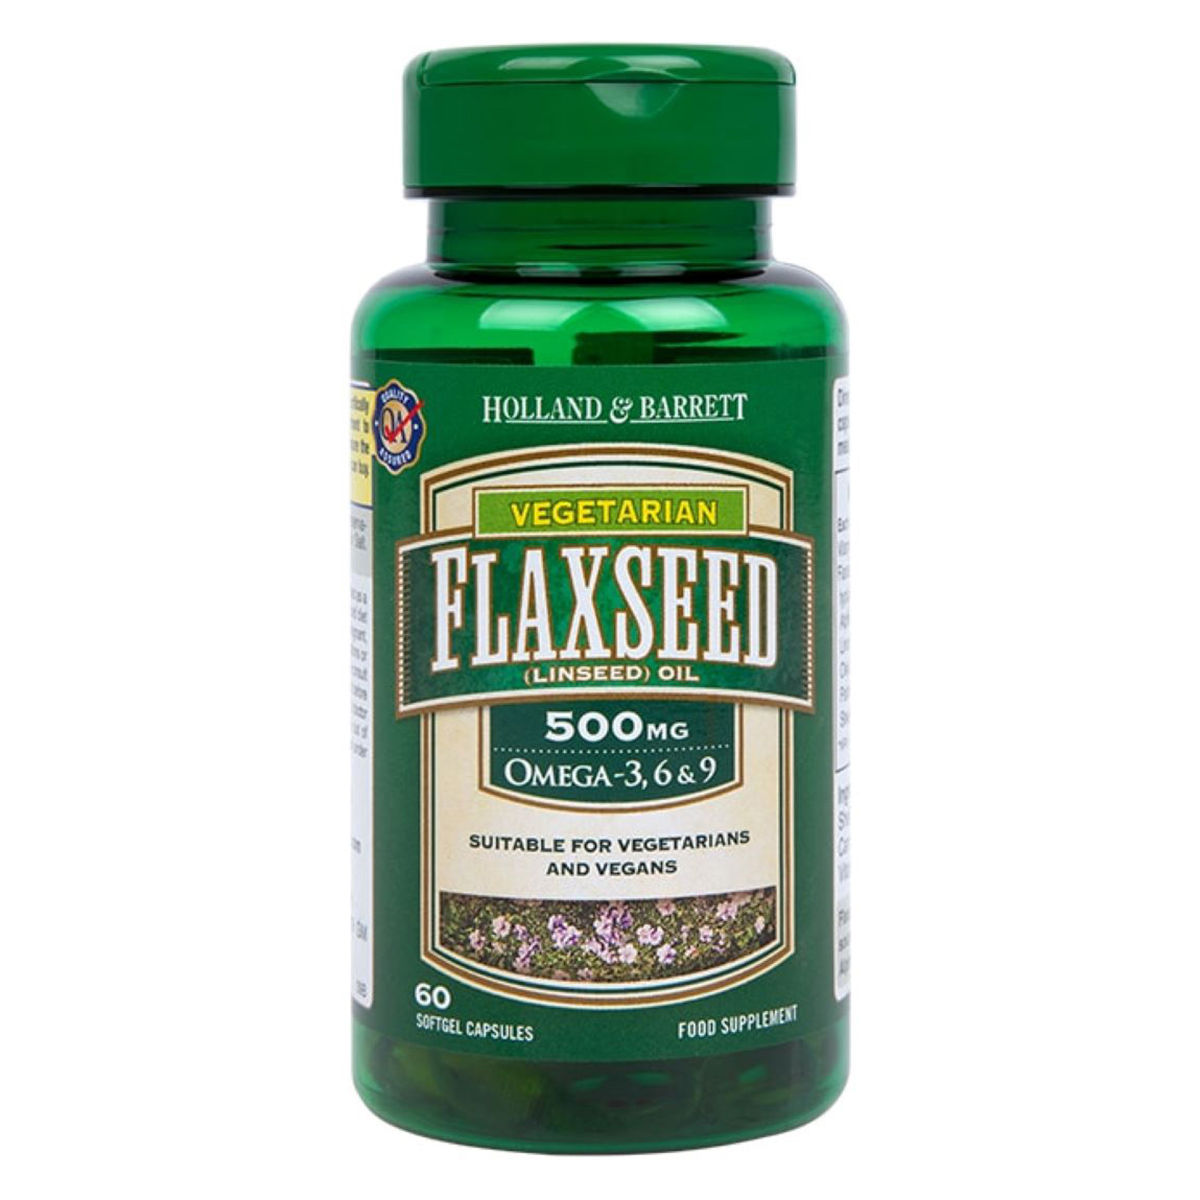 Buy Holland & Barrett Flaxseed Omega-3-6-9 500 mg, 60 Capsules Online